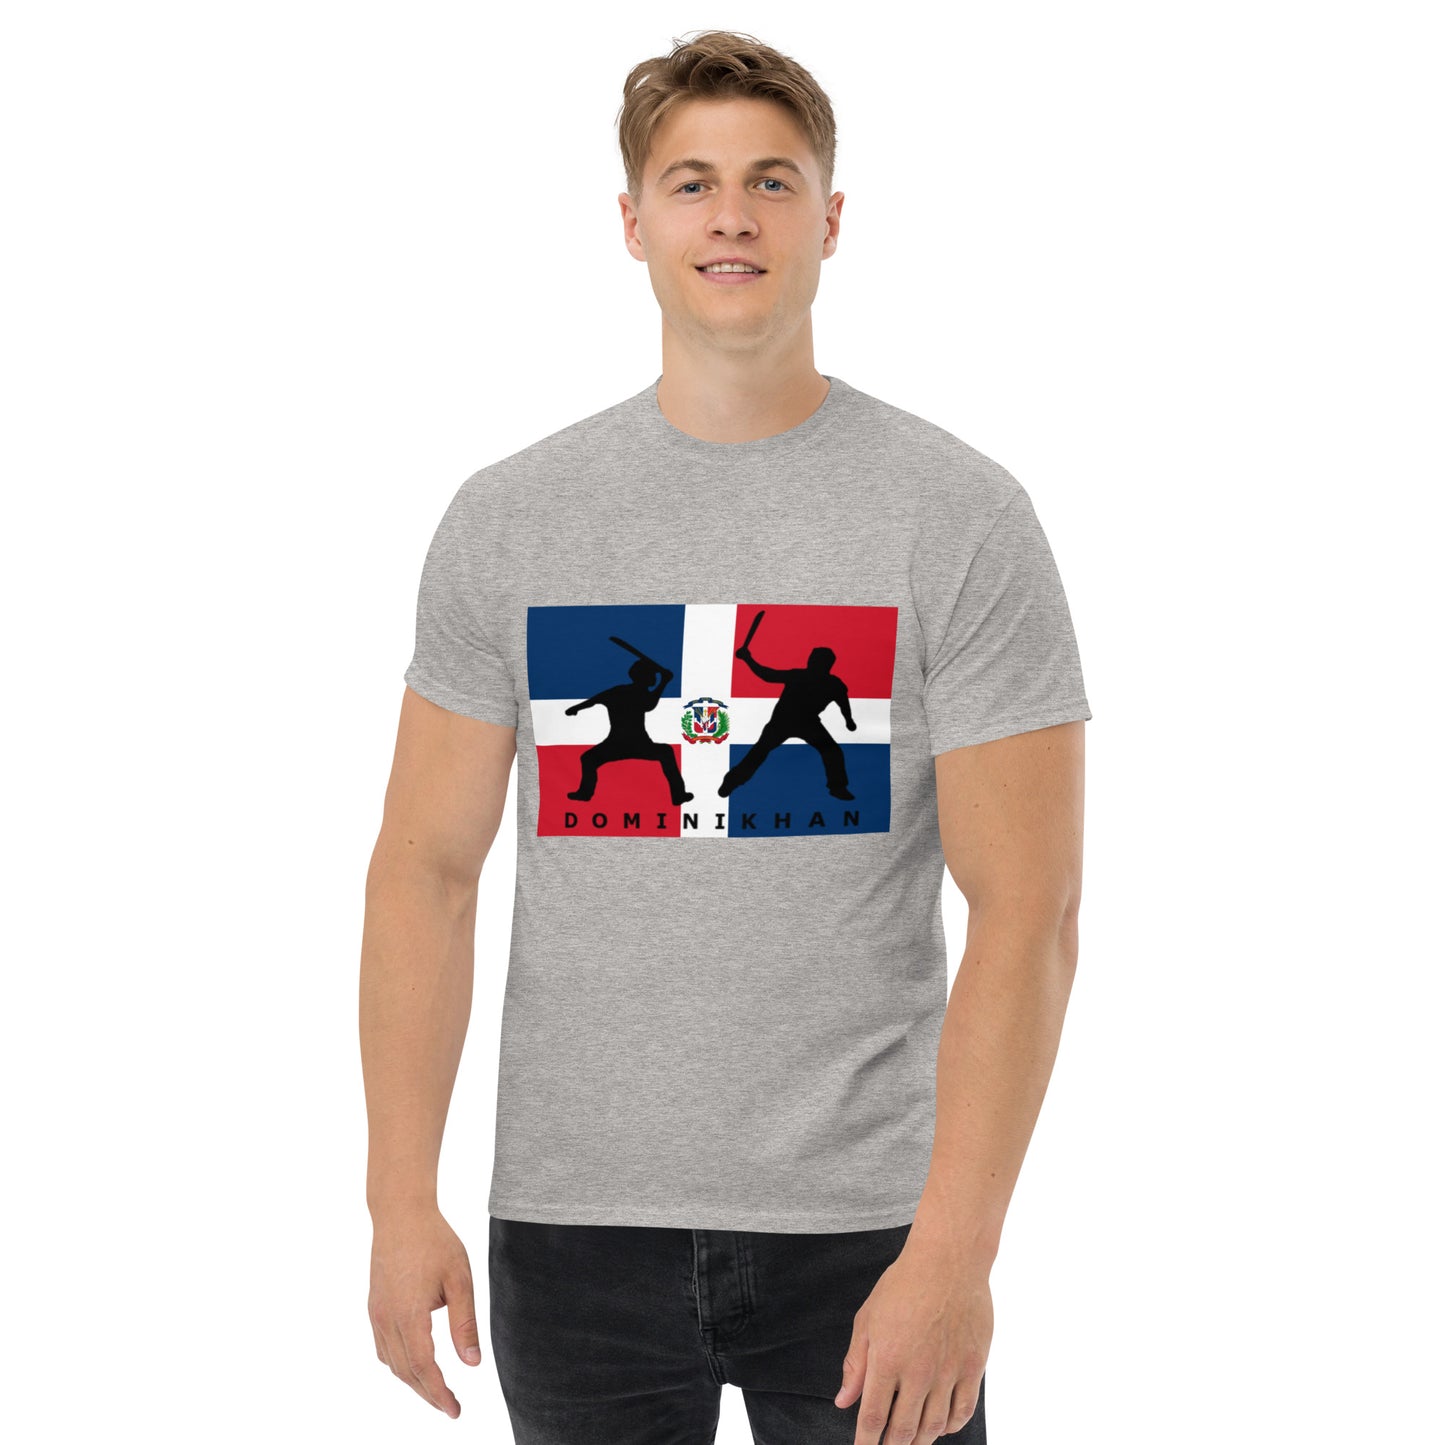 Dominikhan T-Shirt